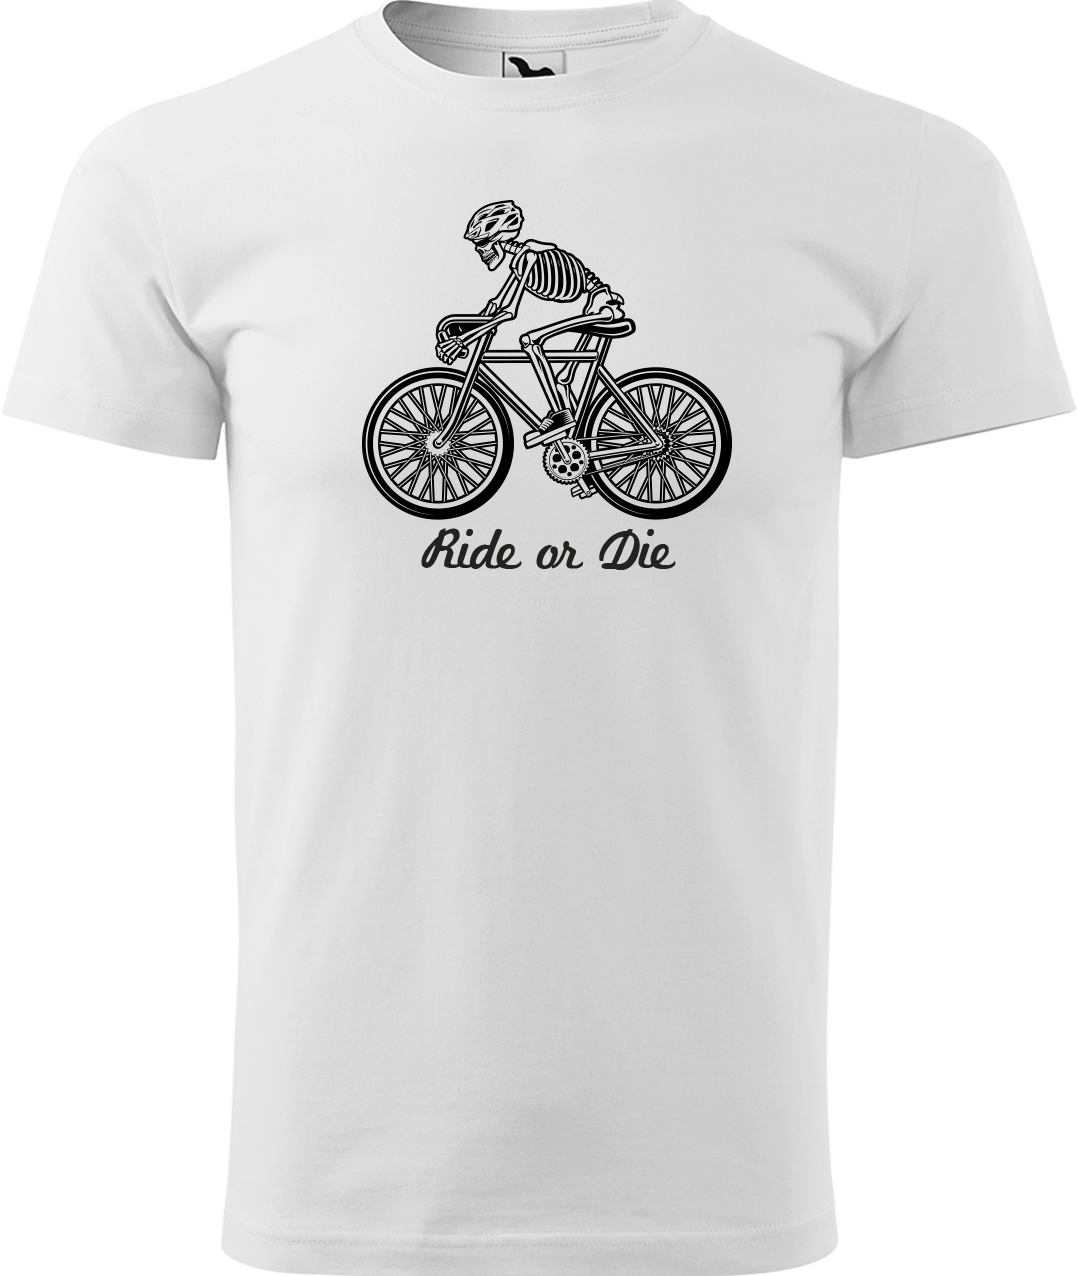 Pánské tričko pro cyklistu - Ride or Die Velikost: 4XL, Barva: Bílá (00)